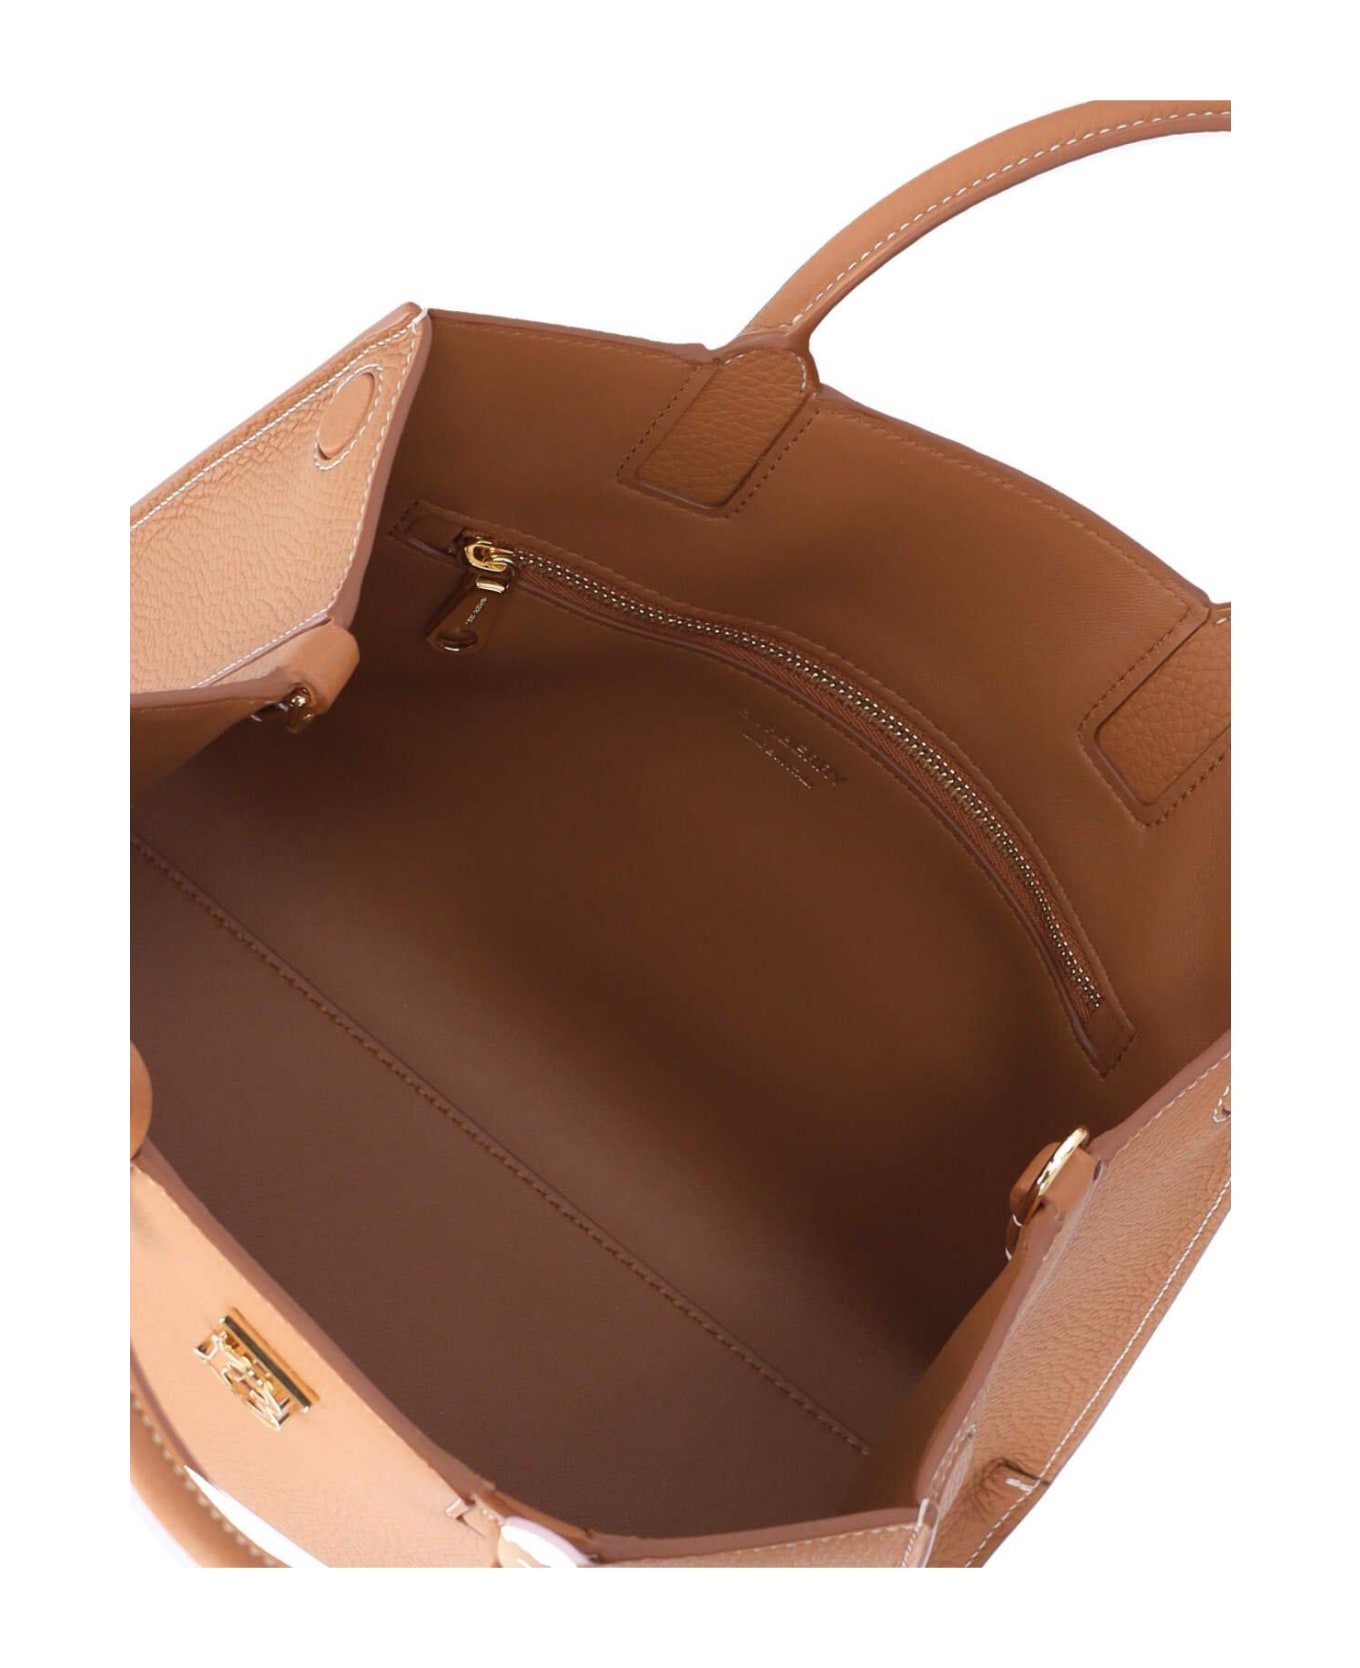 Burberry Mini Frances Top Handle Bag - Warm Russet Brown